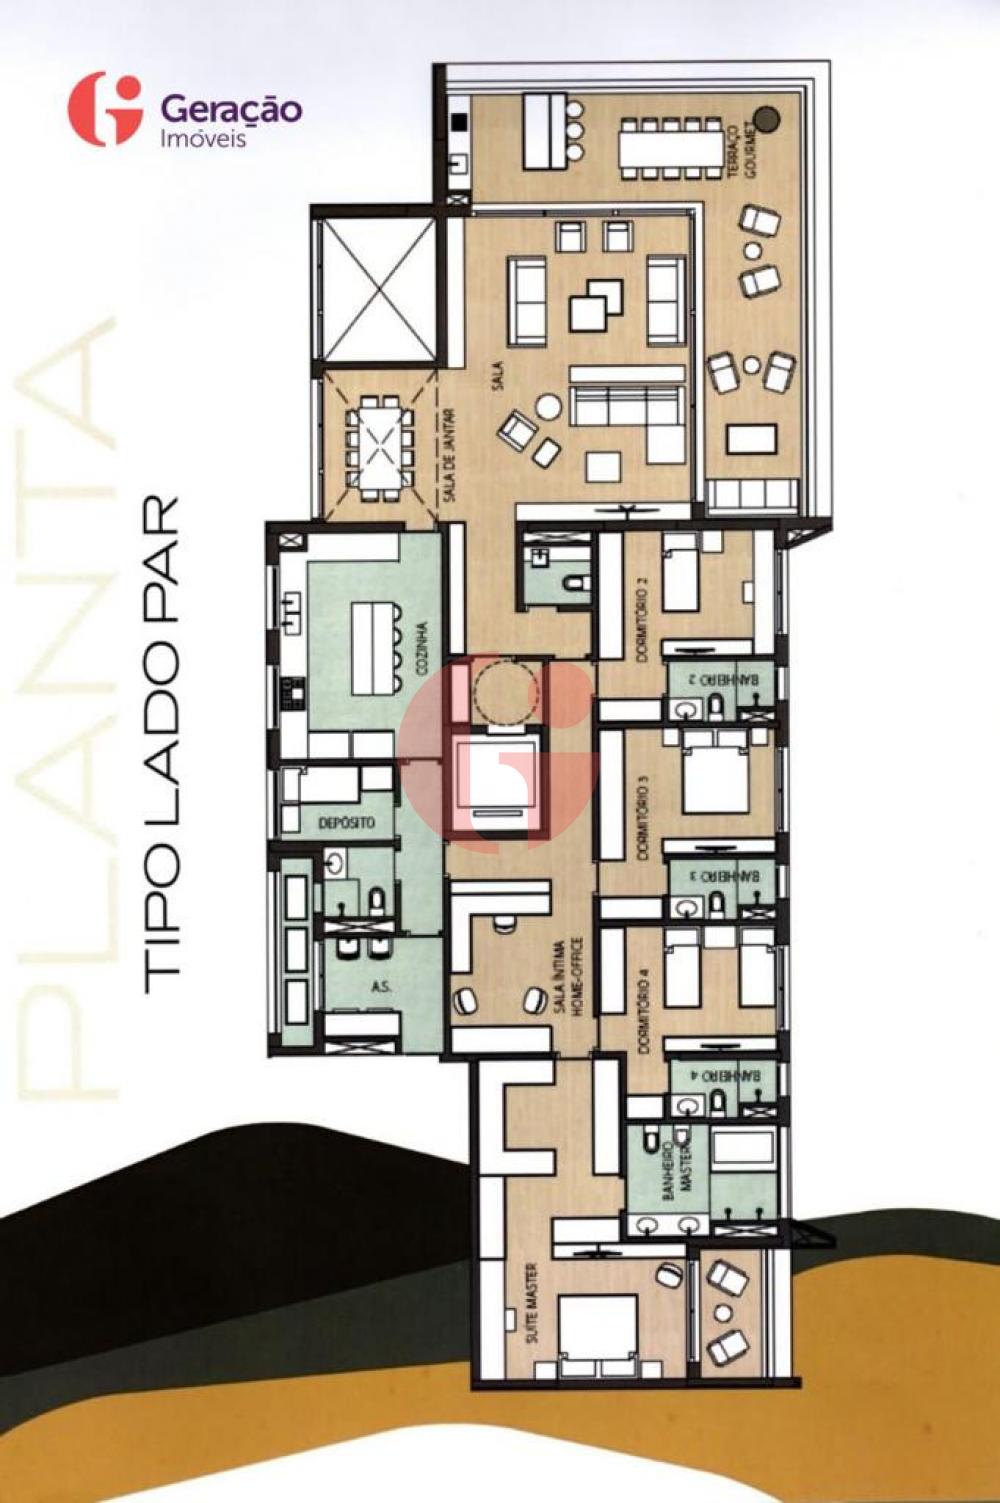 Plantas - rizon Park - Apartamentos